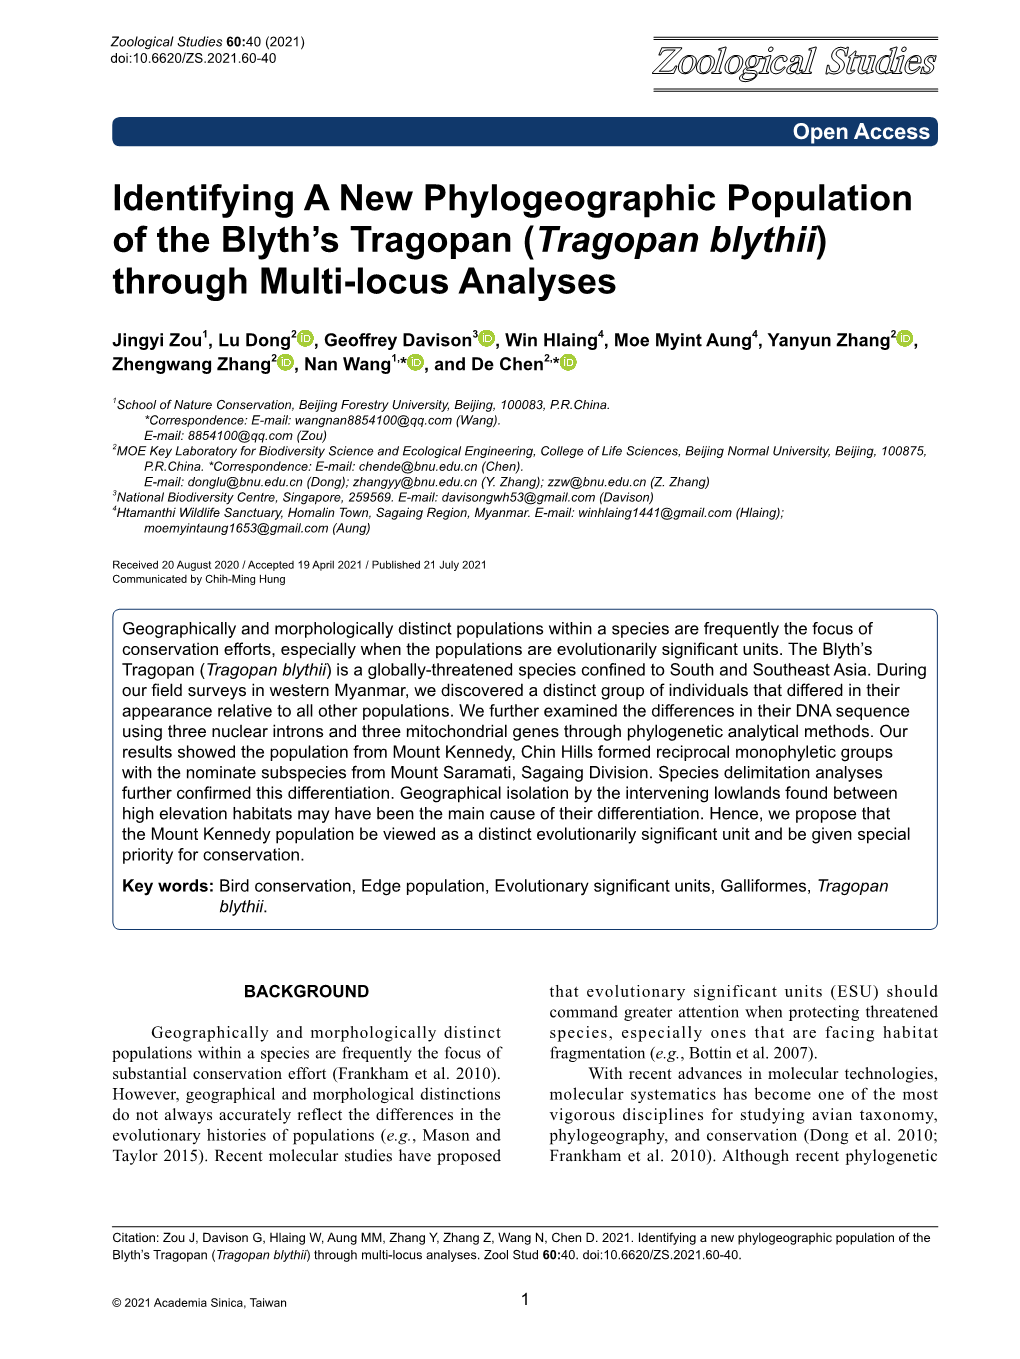 Identifying a New Phylogeographic Population of the Blyth's Tragopan (Tragopan Blythii) Through Multi-Locus Analyses